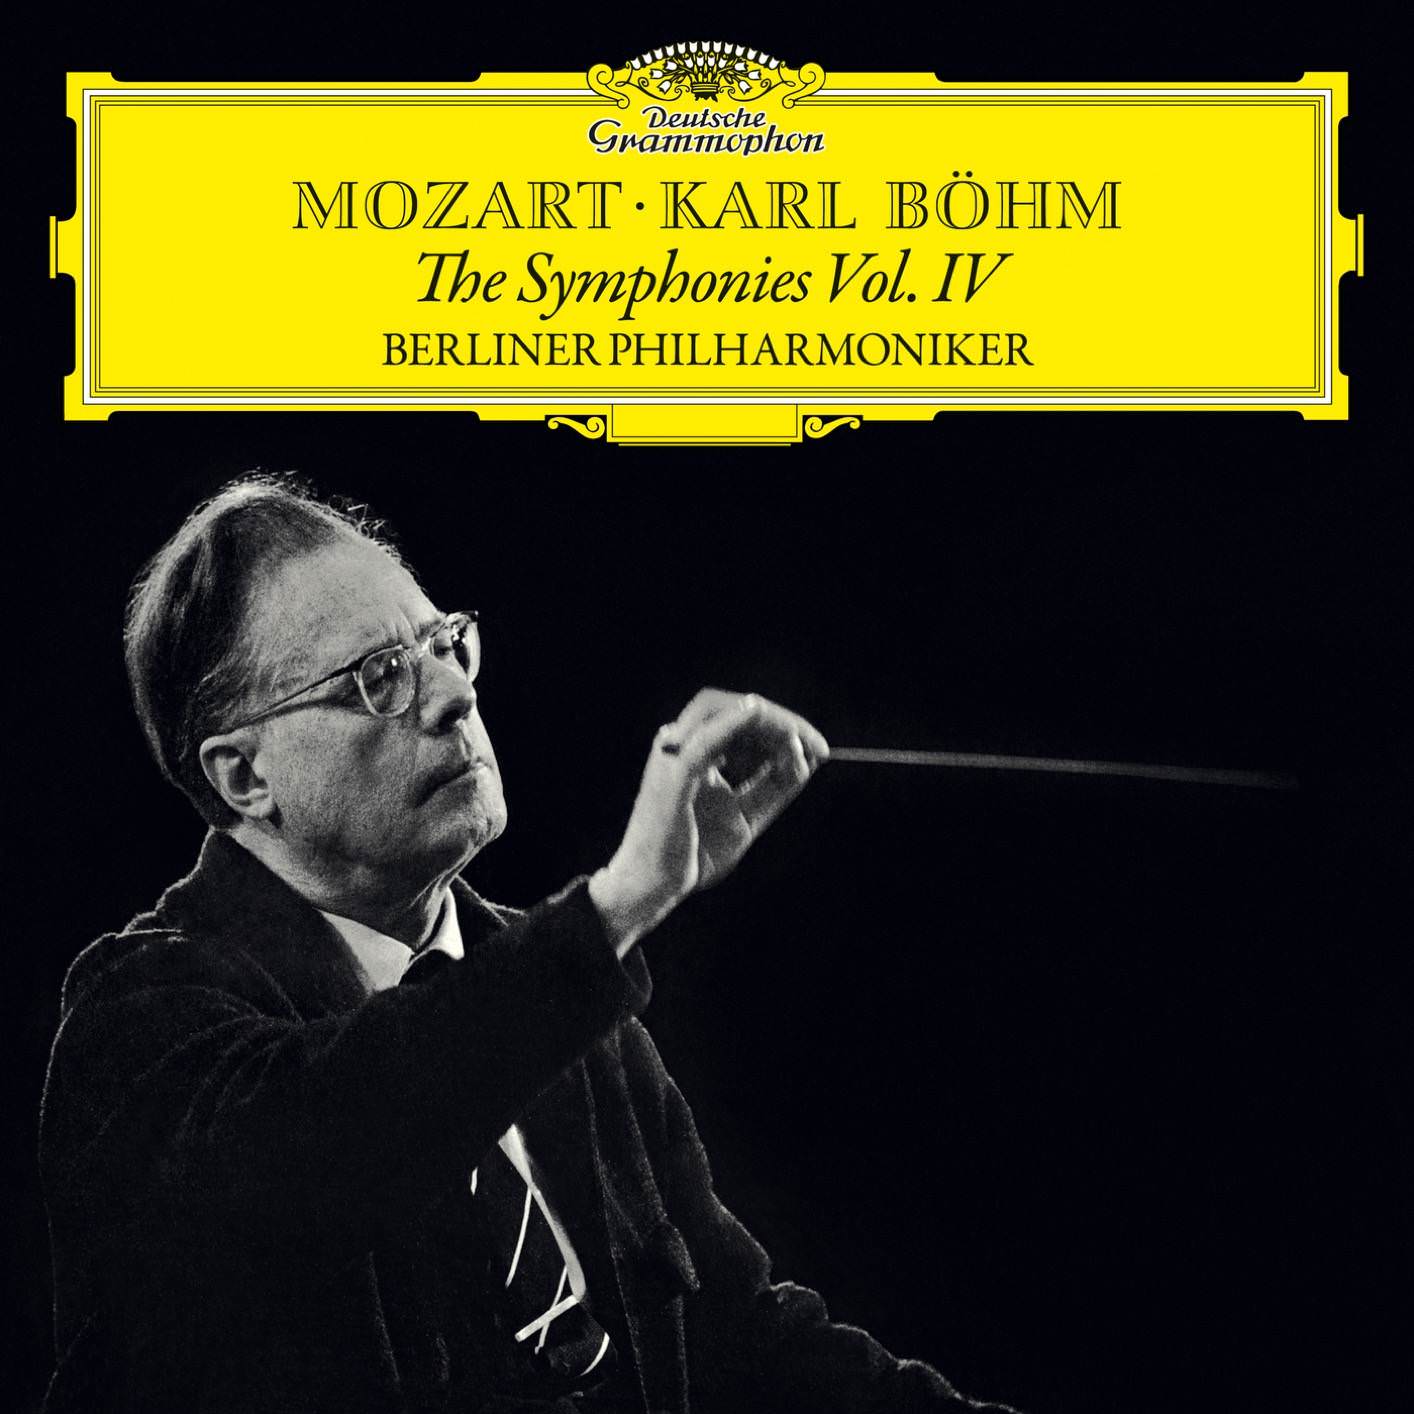 Berliner Philharmoniker & Karl Bohm - Mozart: The Symphonies Vol. IV (Remastered) (2018) [FLAC 24bit/192kHz]